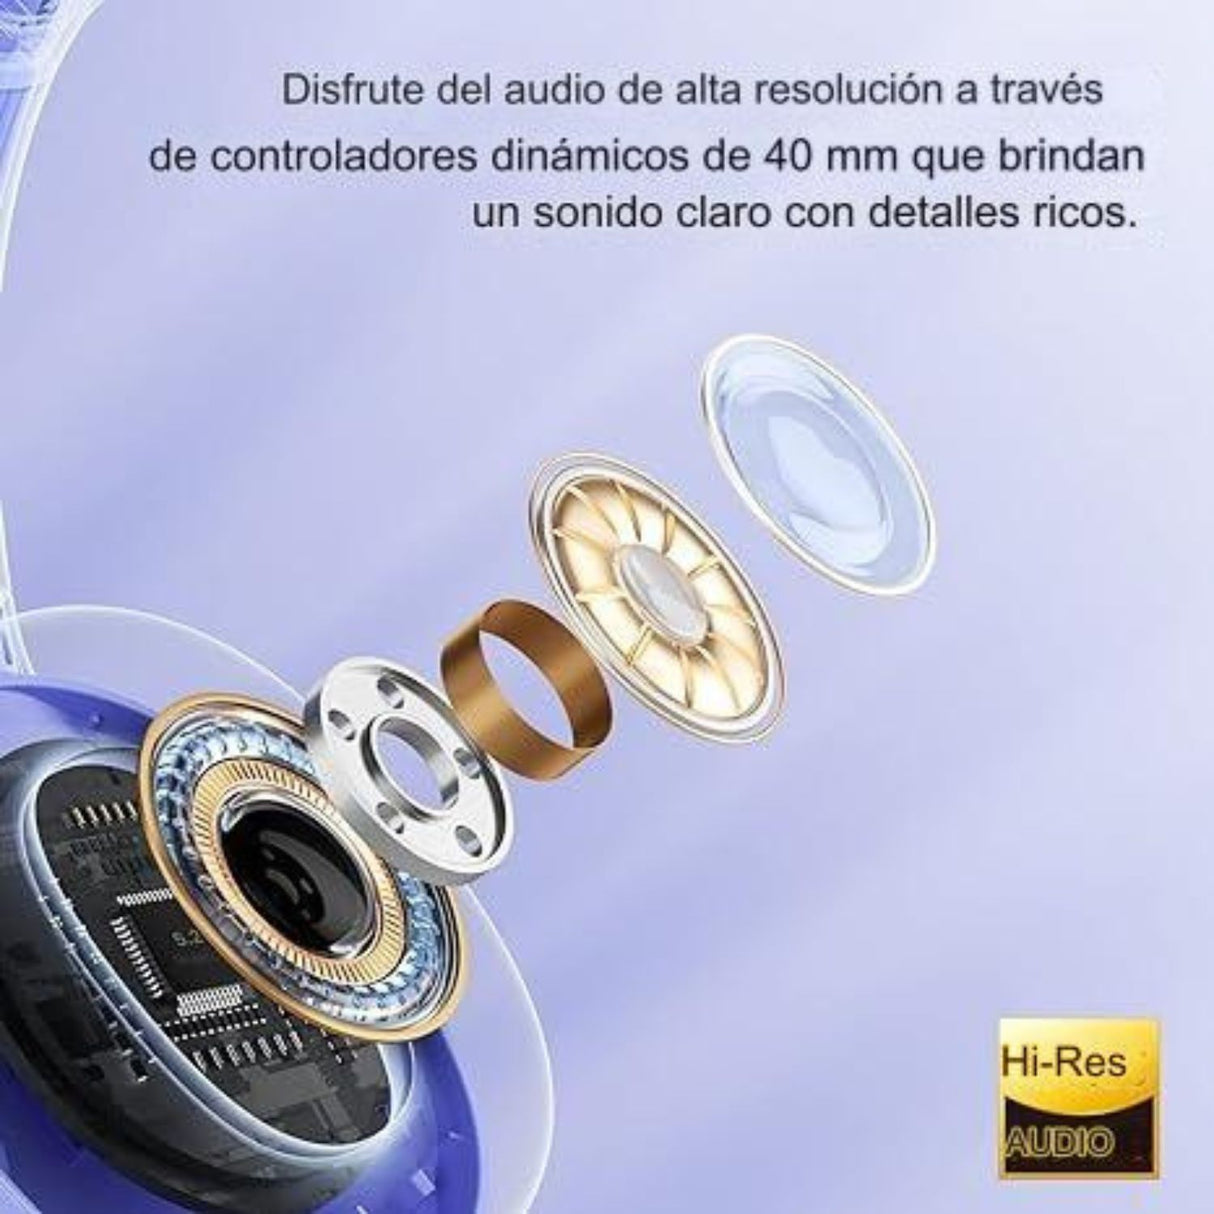 Audífonos inalámbricos Haylou S35